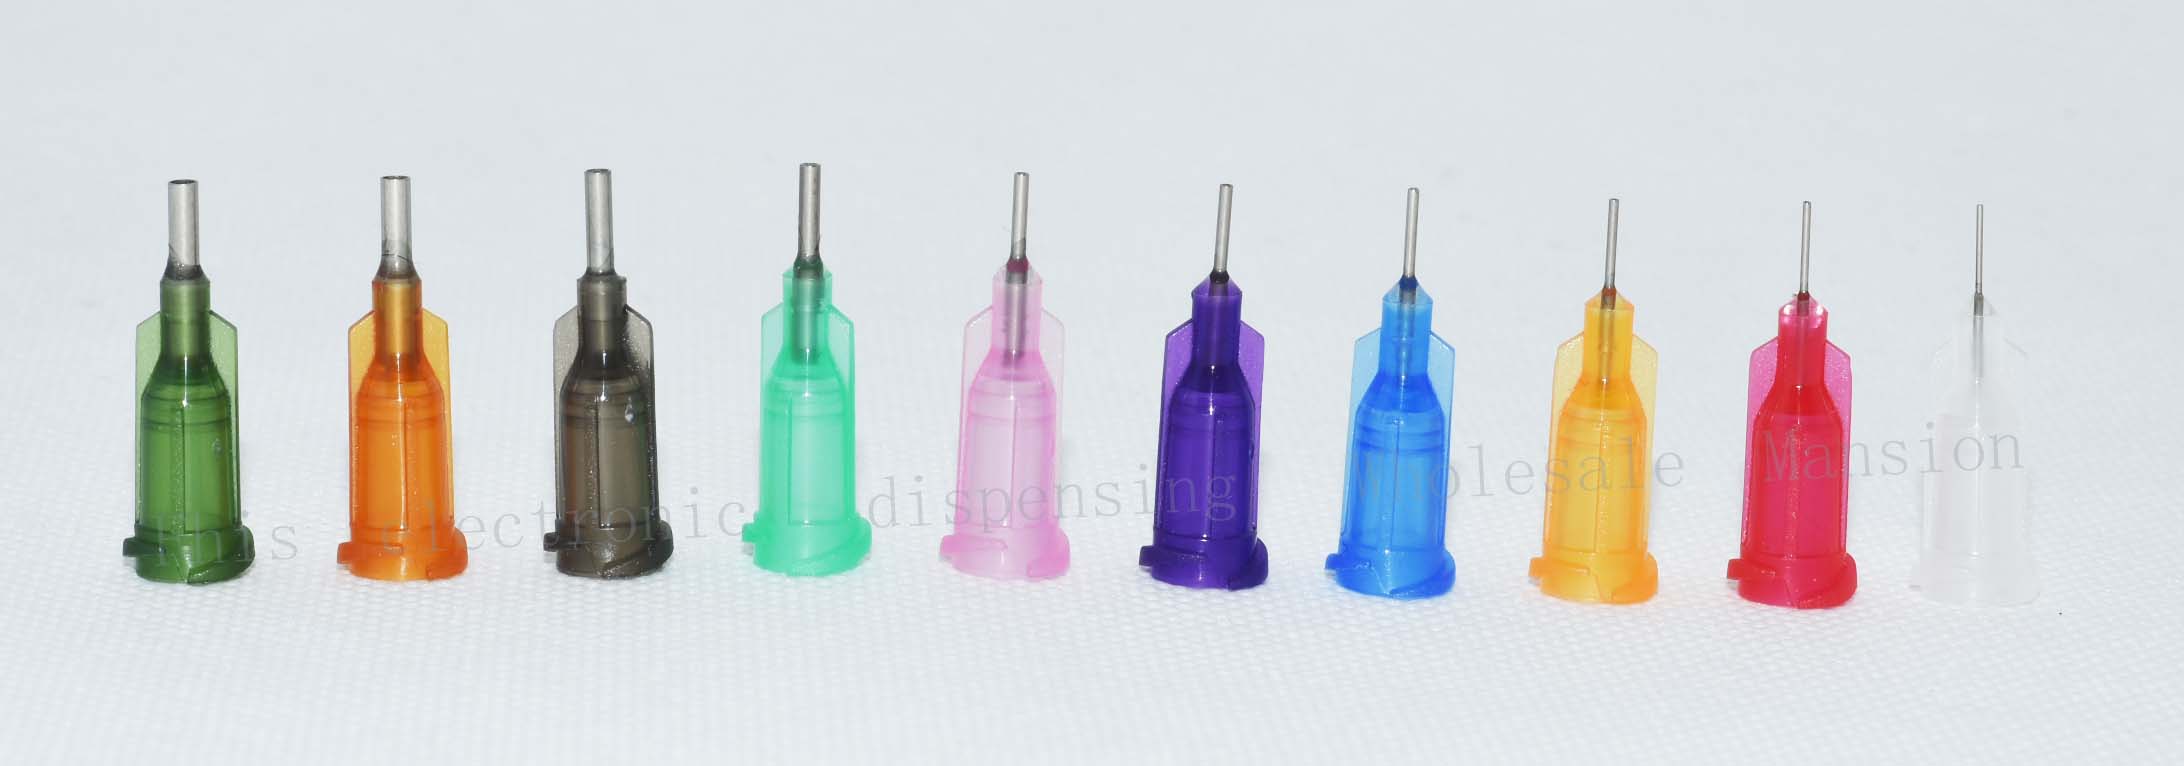 

Wholesale 14G-27G W/ISO Standard Dispensing Needles PP Luer Lock Hub 0.25 Inch Tubing Length Precision S.S. Dispense Blunt Tips